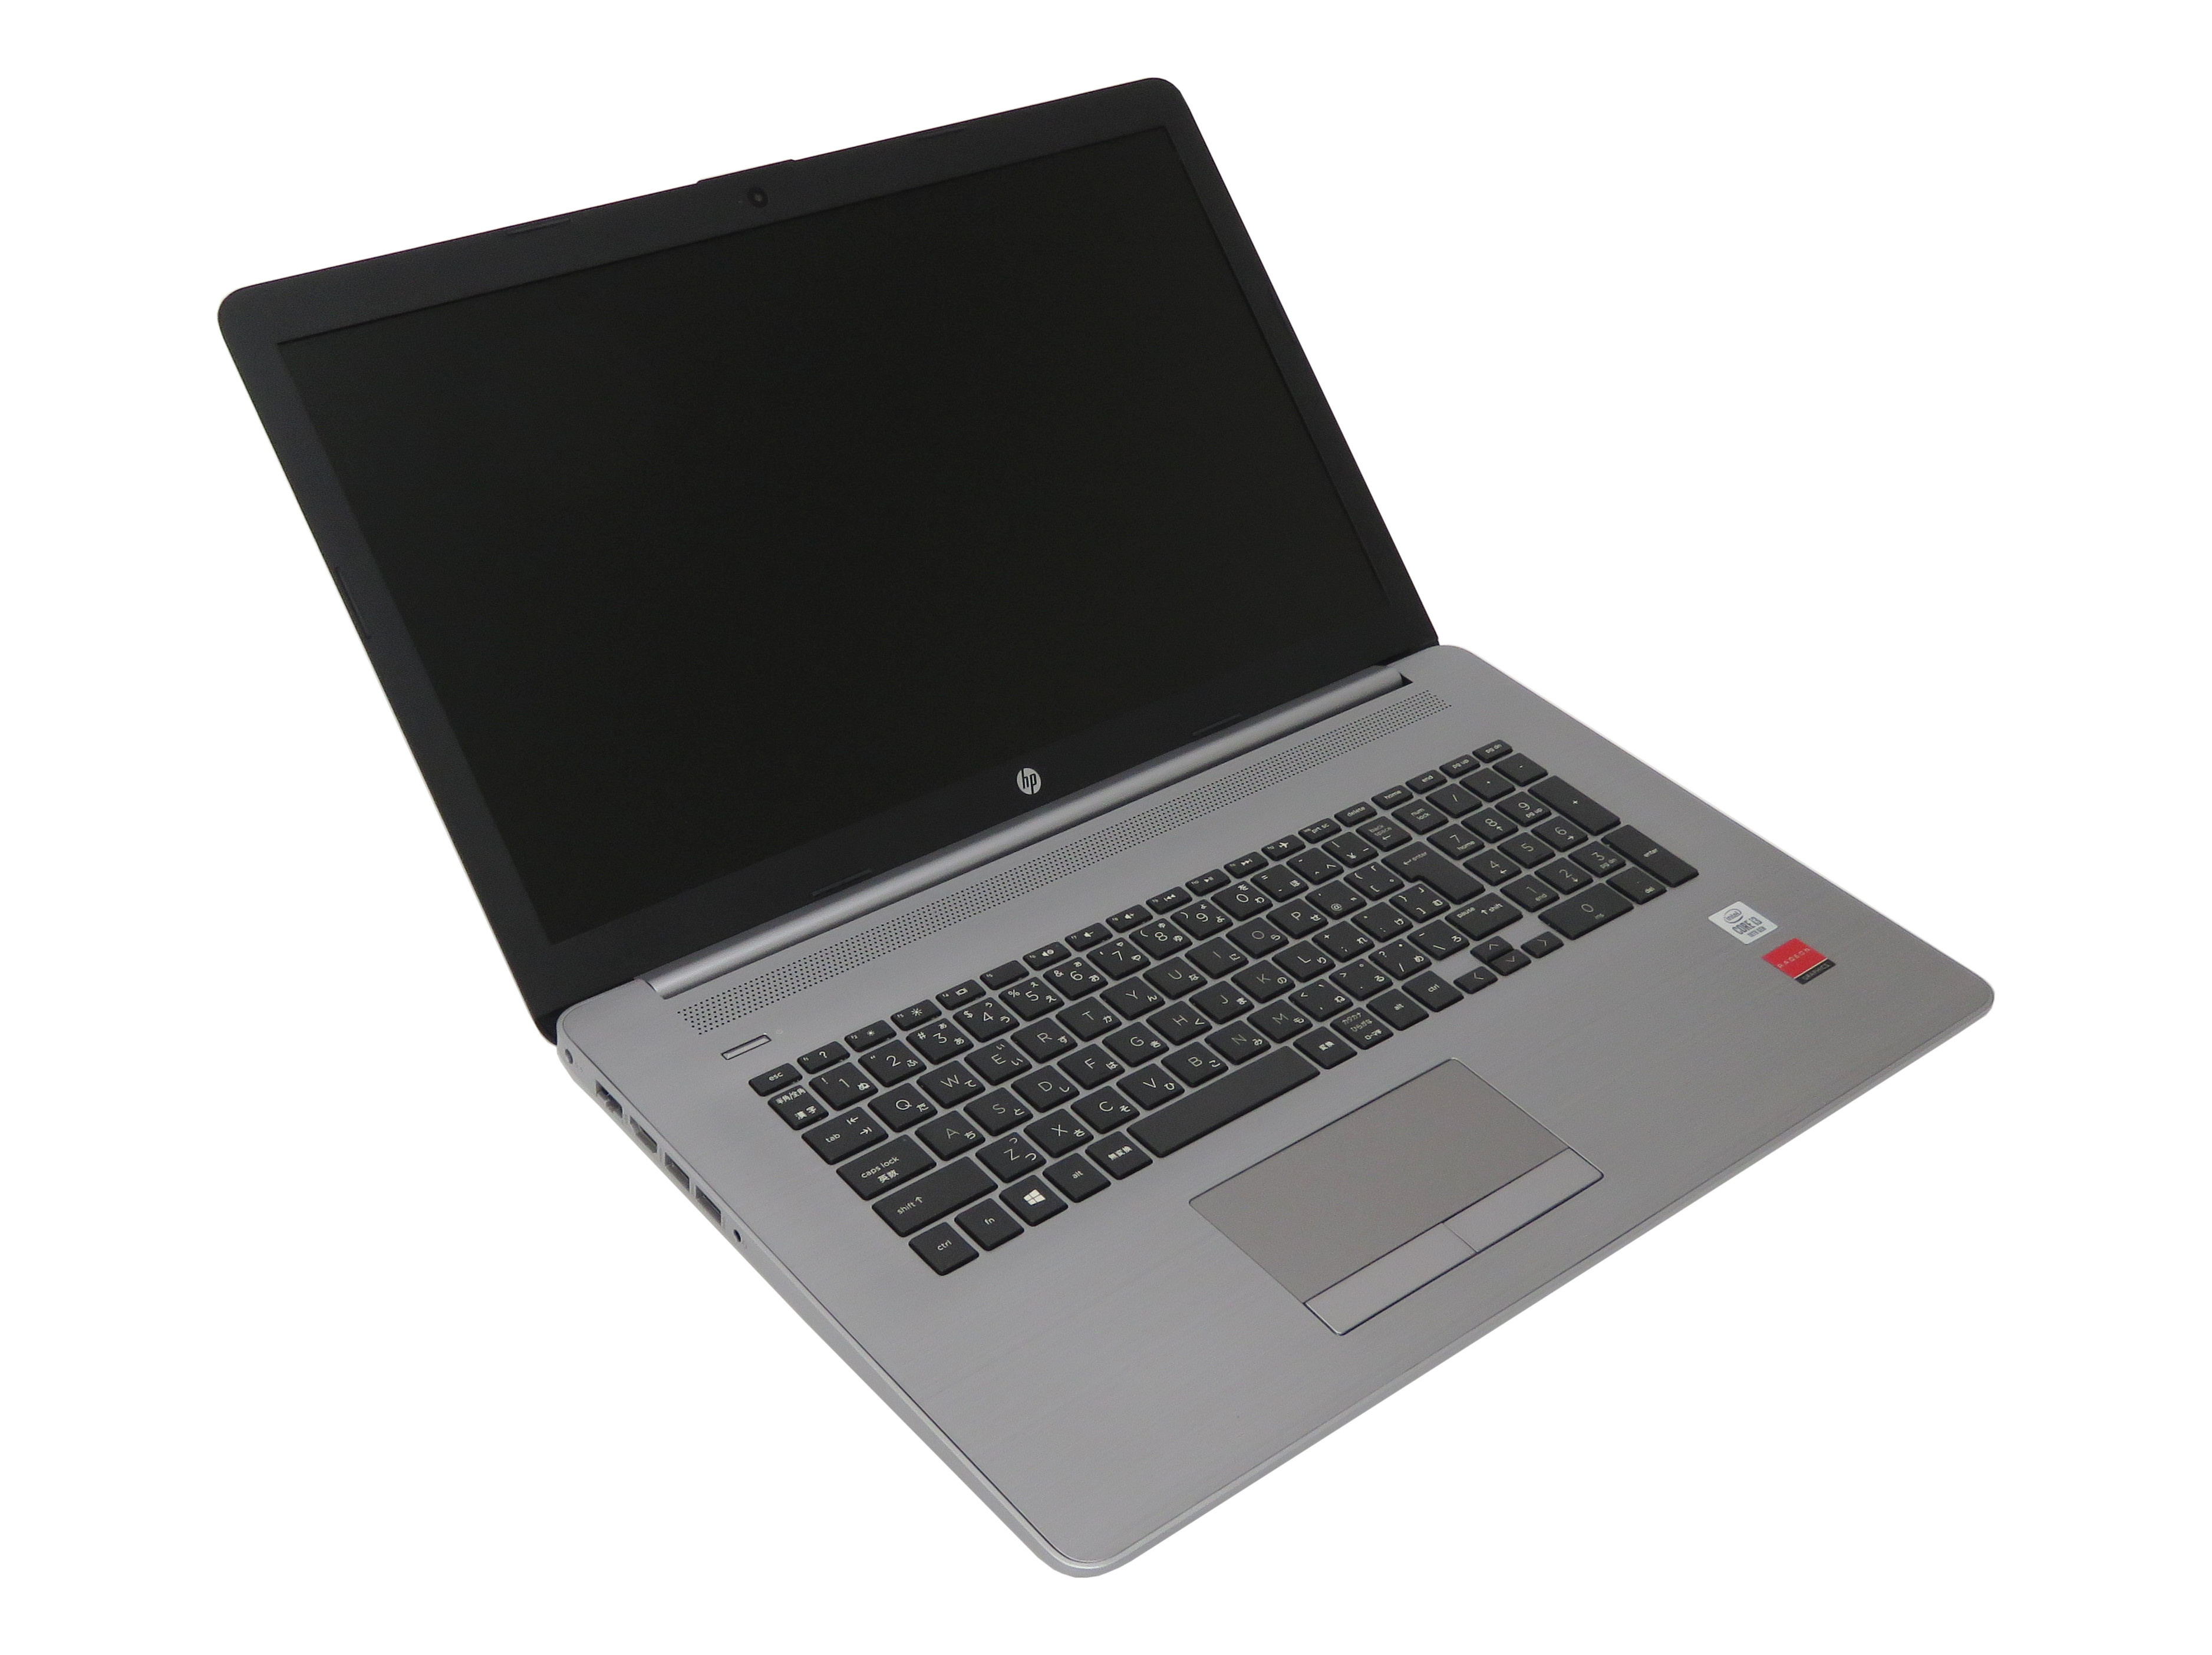 【HP】470 G7 Notebook PC